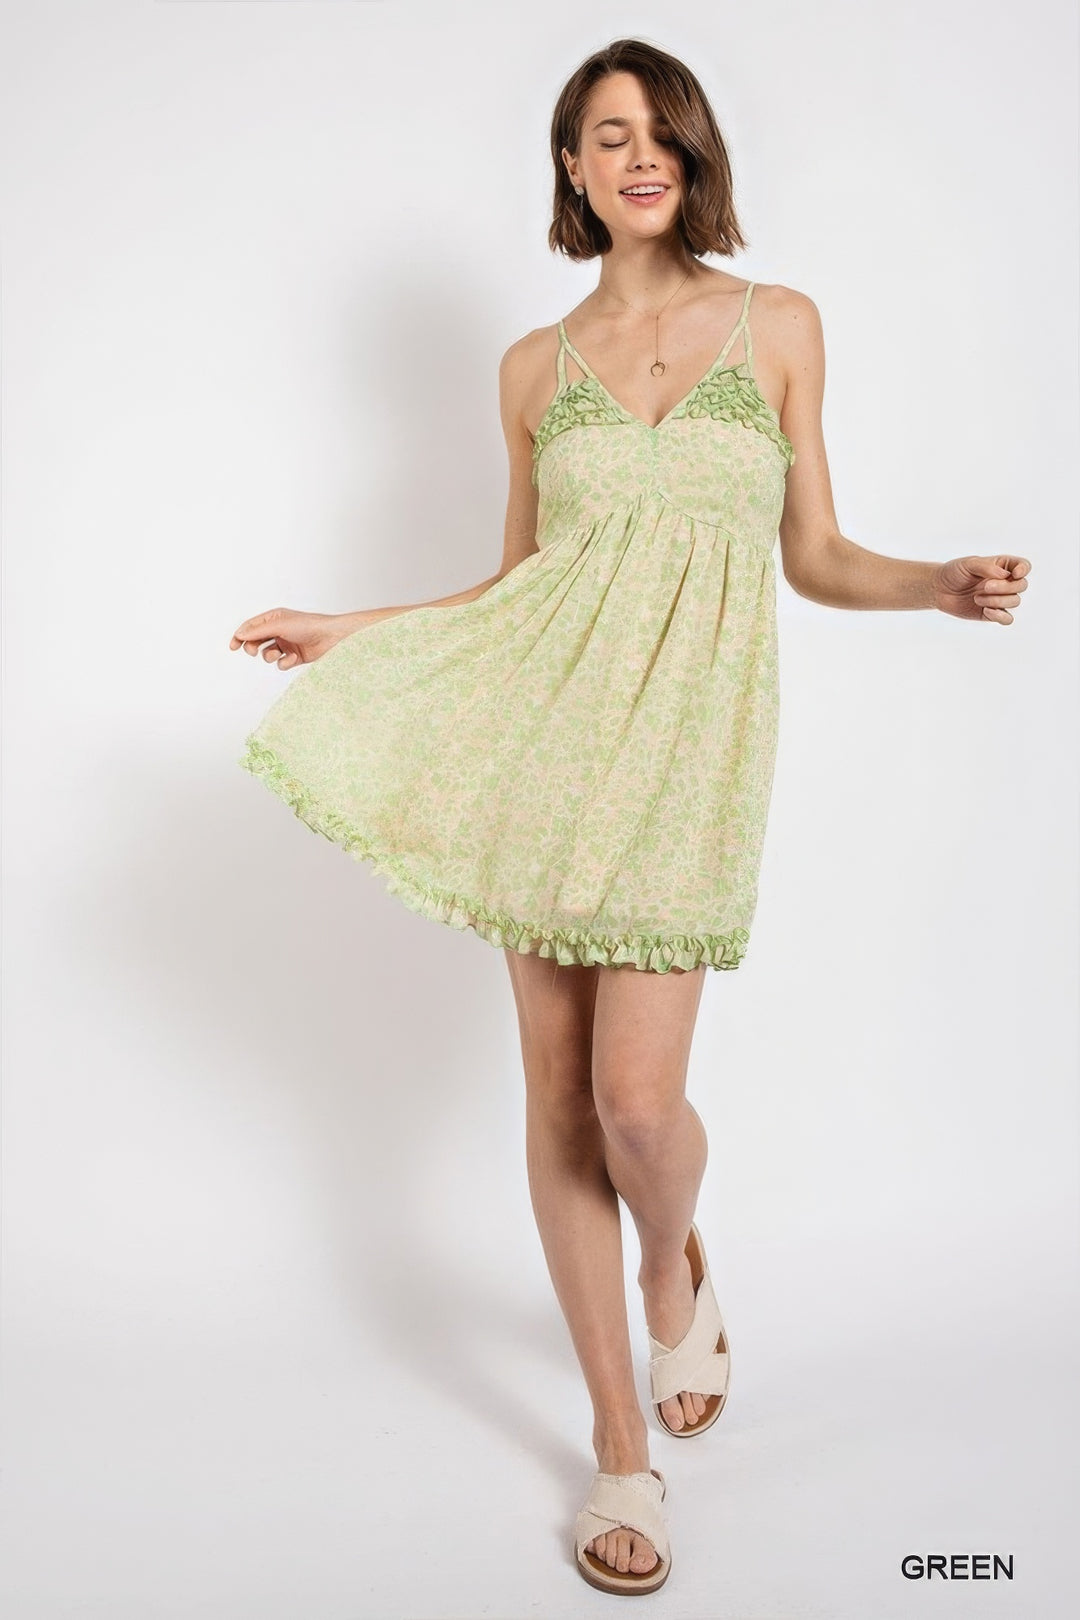 Floral Print V-Neck Dress with Skirt Lining - Elegant Green Design - Sizes S, M, L.